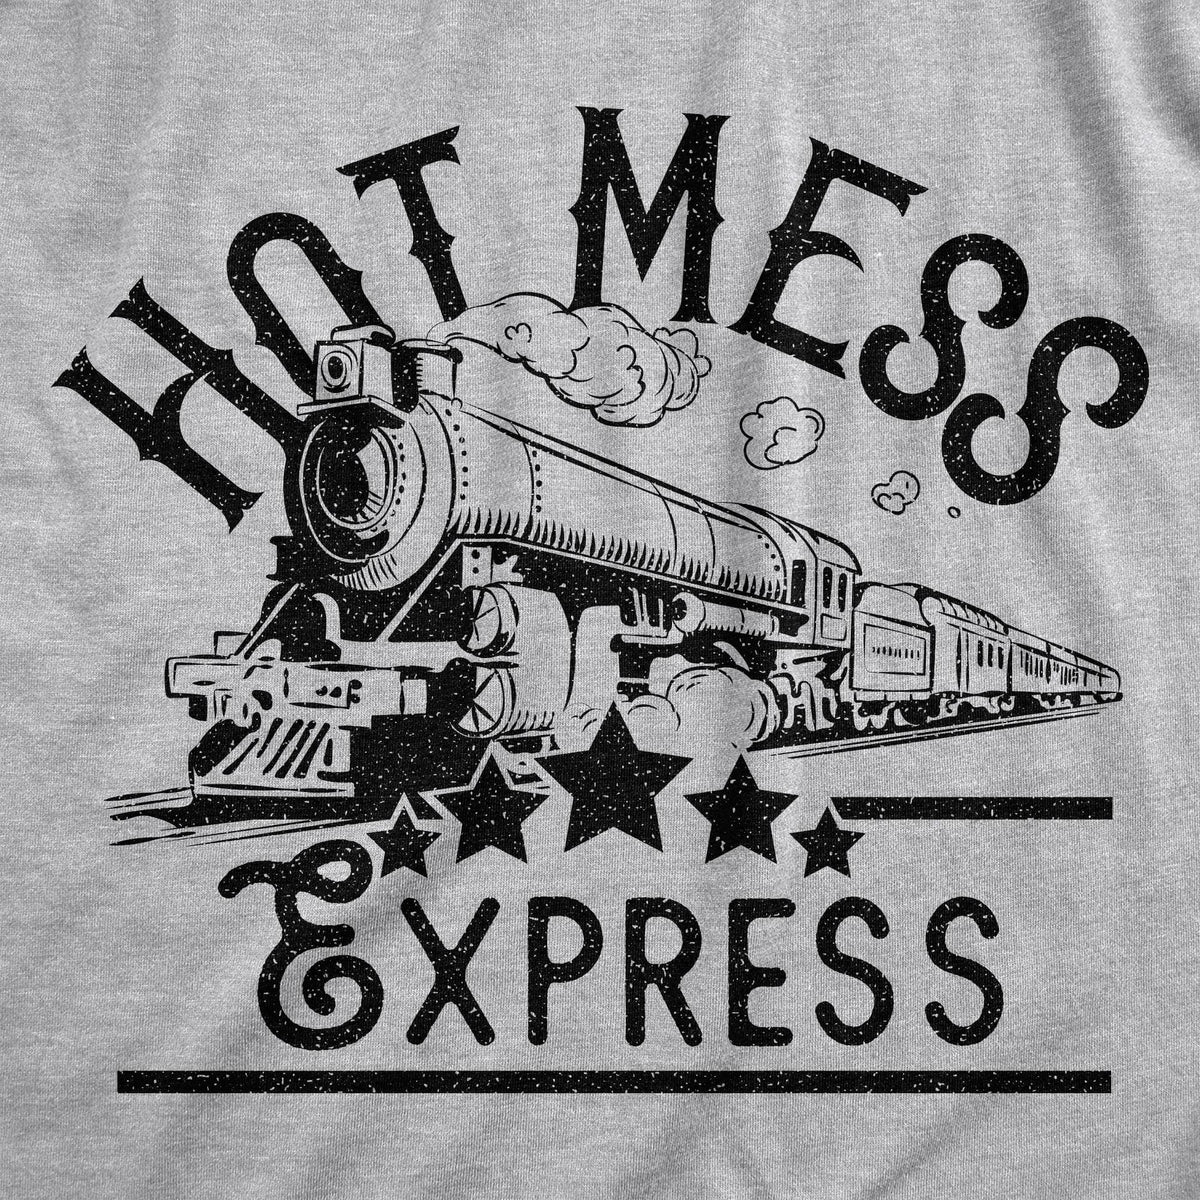 Hot Mess Express Men&#39;s Tshirt - Crazy Dog T-Shirts